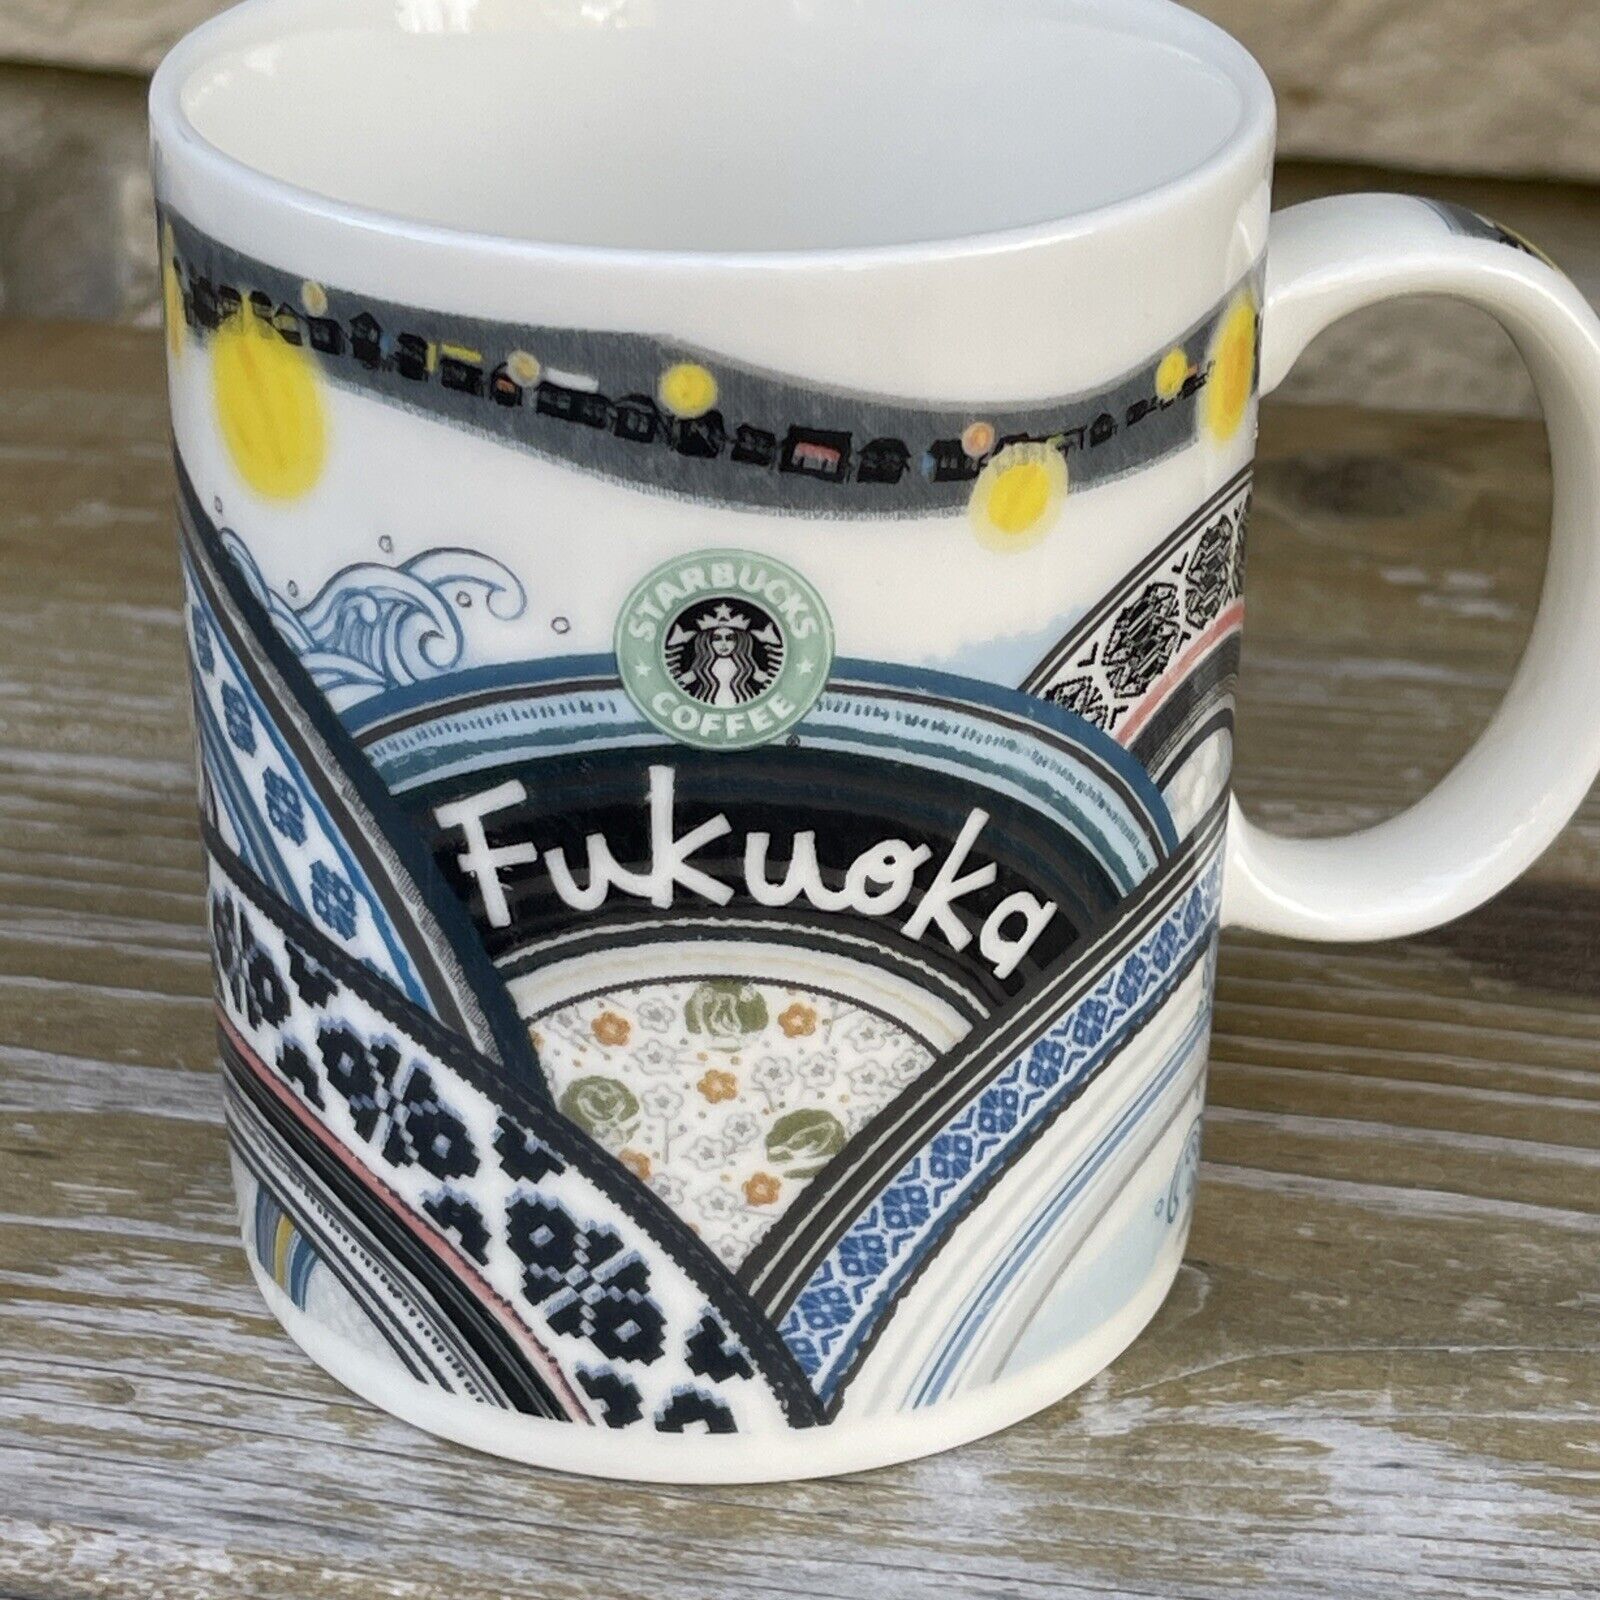 Starbucks Fukuoka Japan City Mug Limited Edition 2011.